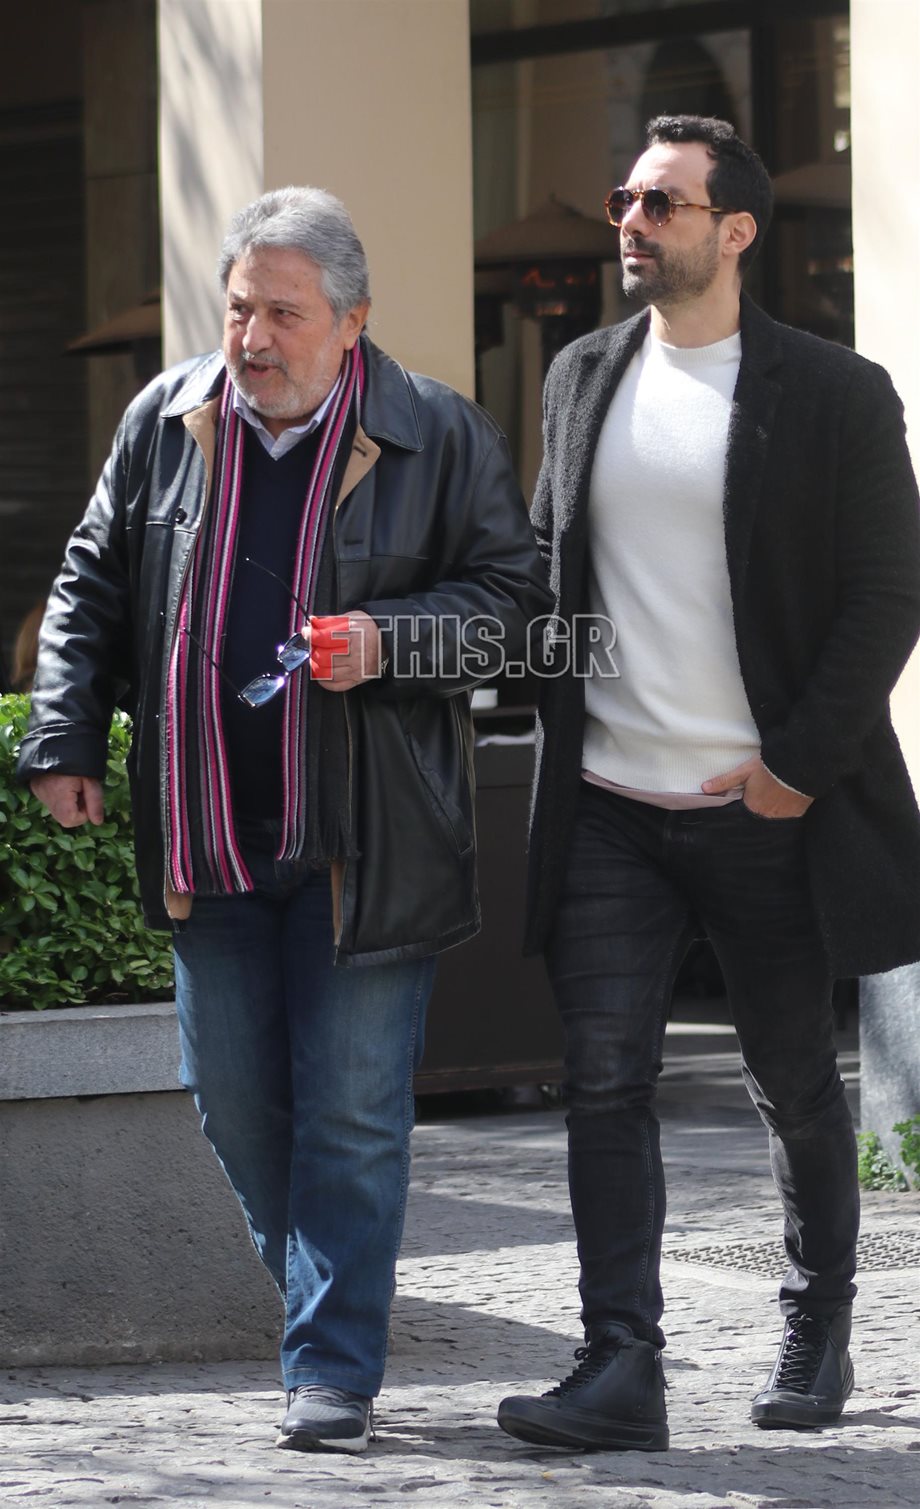 Paparazzi! Σάκης Τανιμανίδης: Βόλτα στο κέντρο της Αθήνας με τον πατέρα του (Φωτογραφίες)